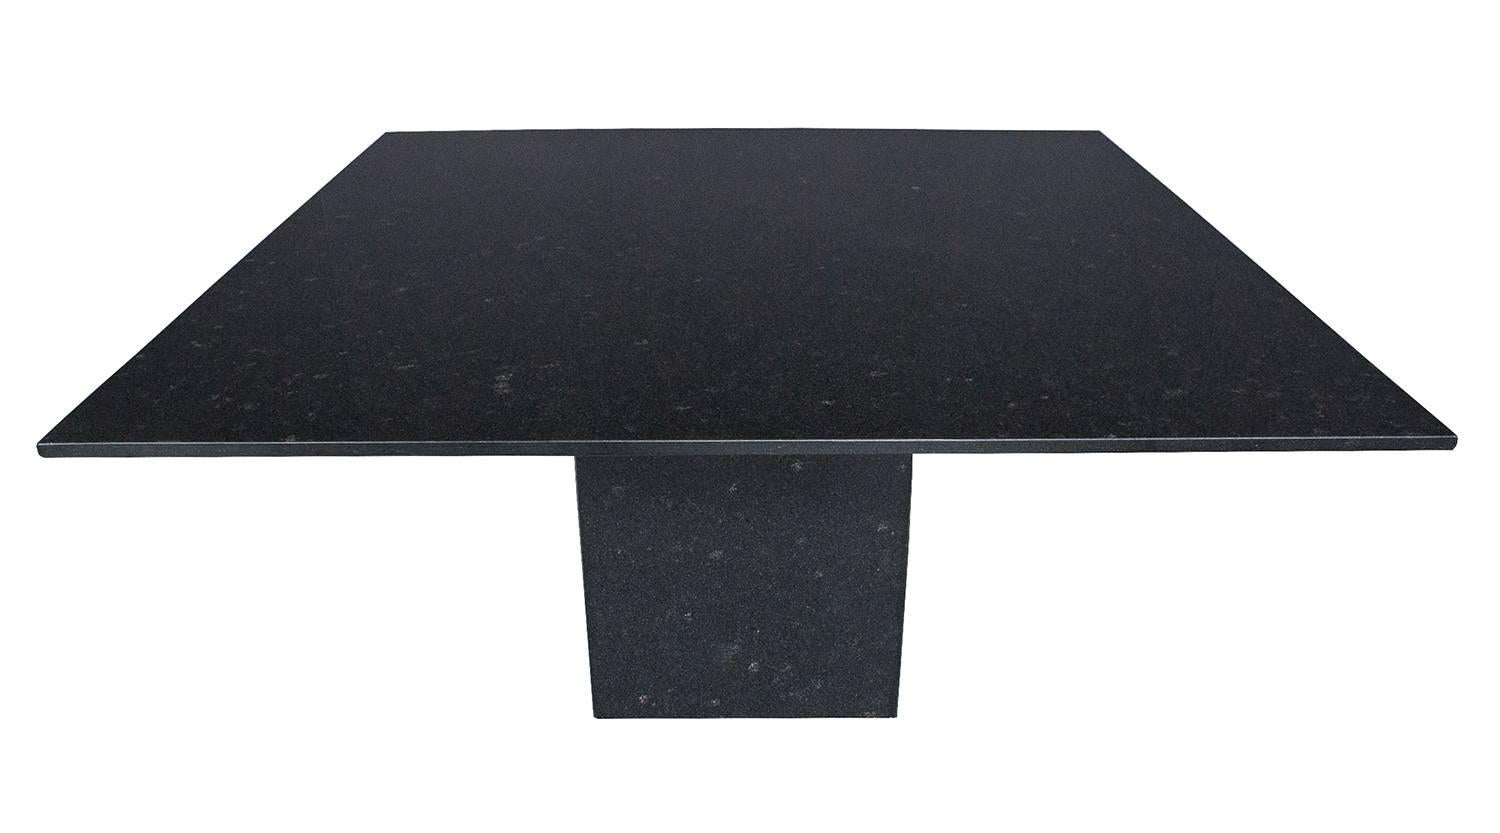 Monolithic solid black granite pedestal dining table. 3/4